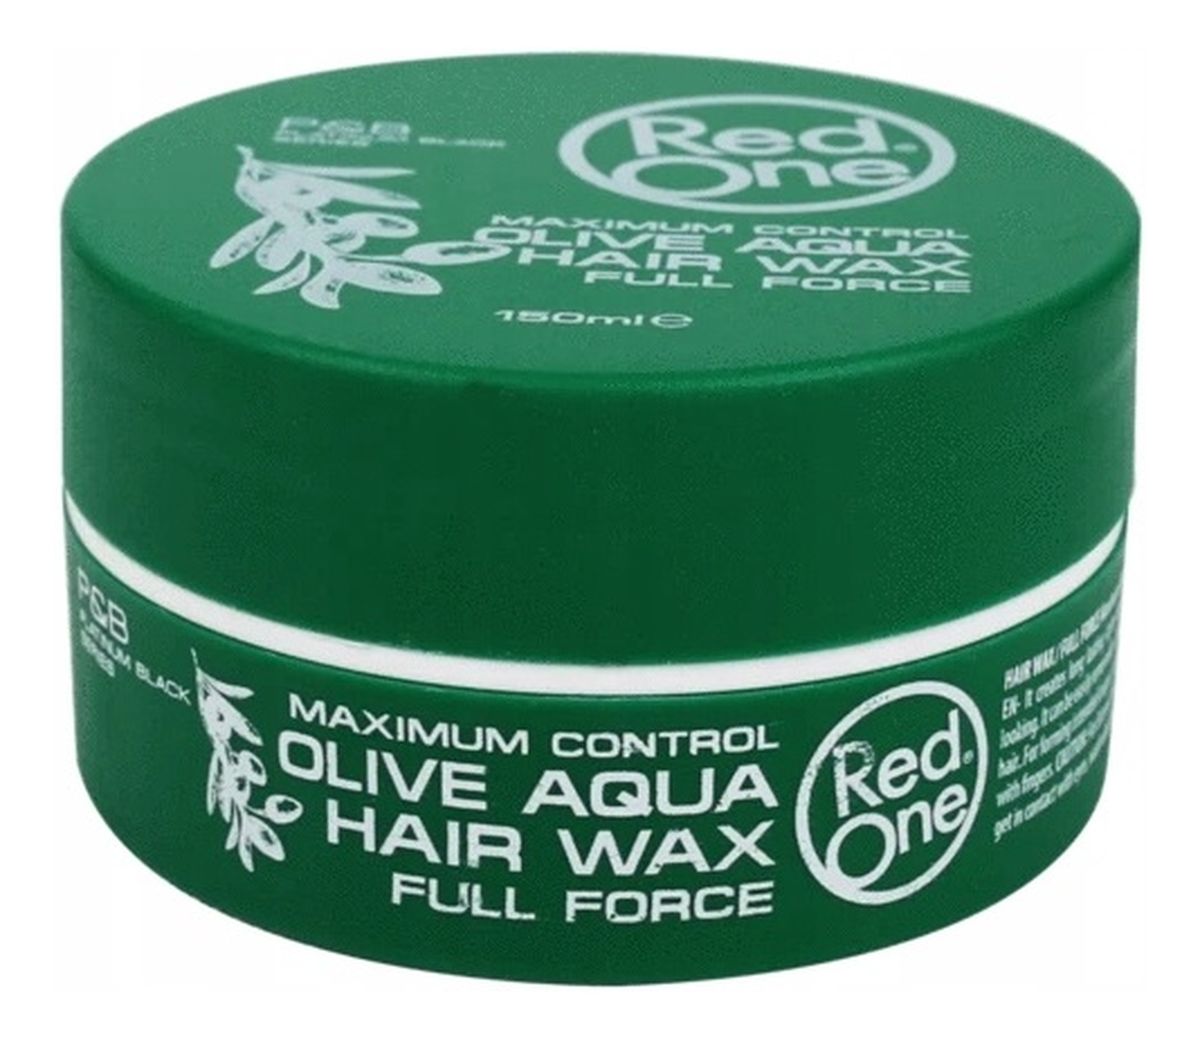 Aqua hair gel wax full force wosk do włosów olive